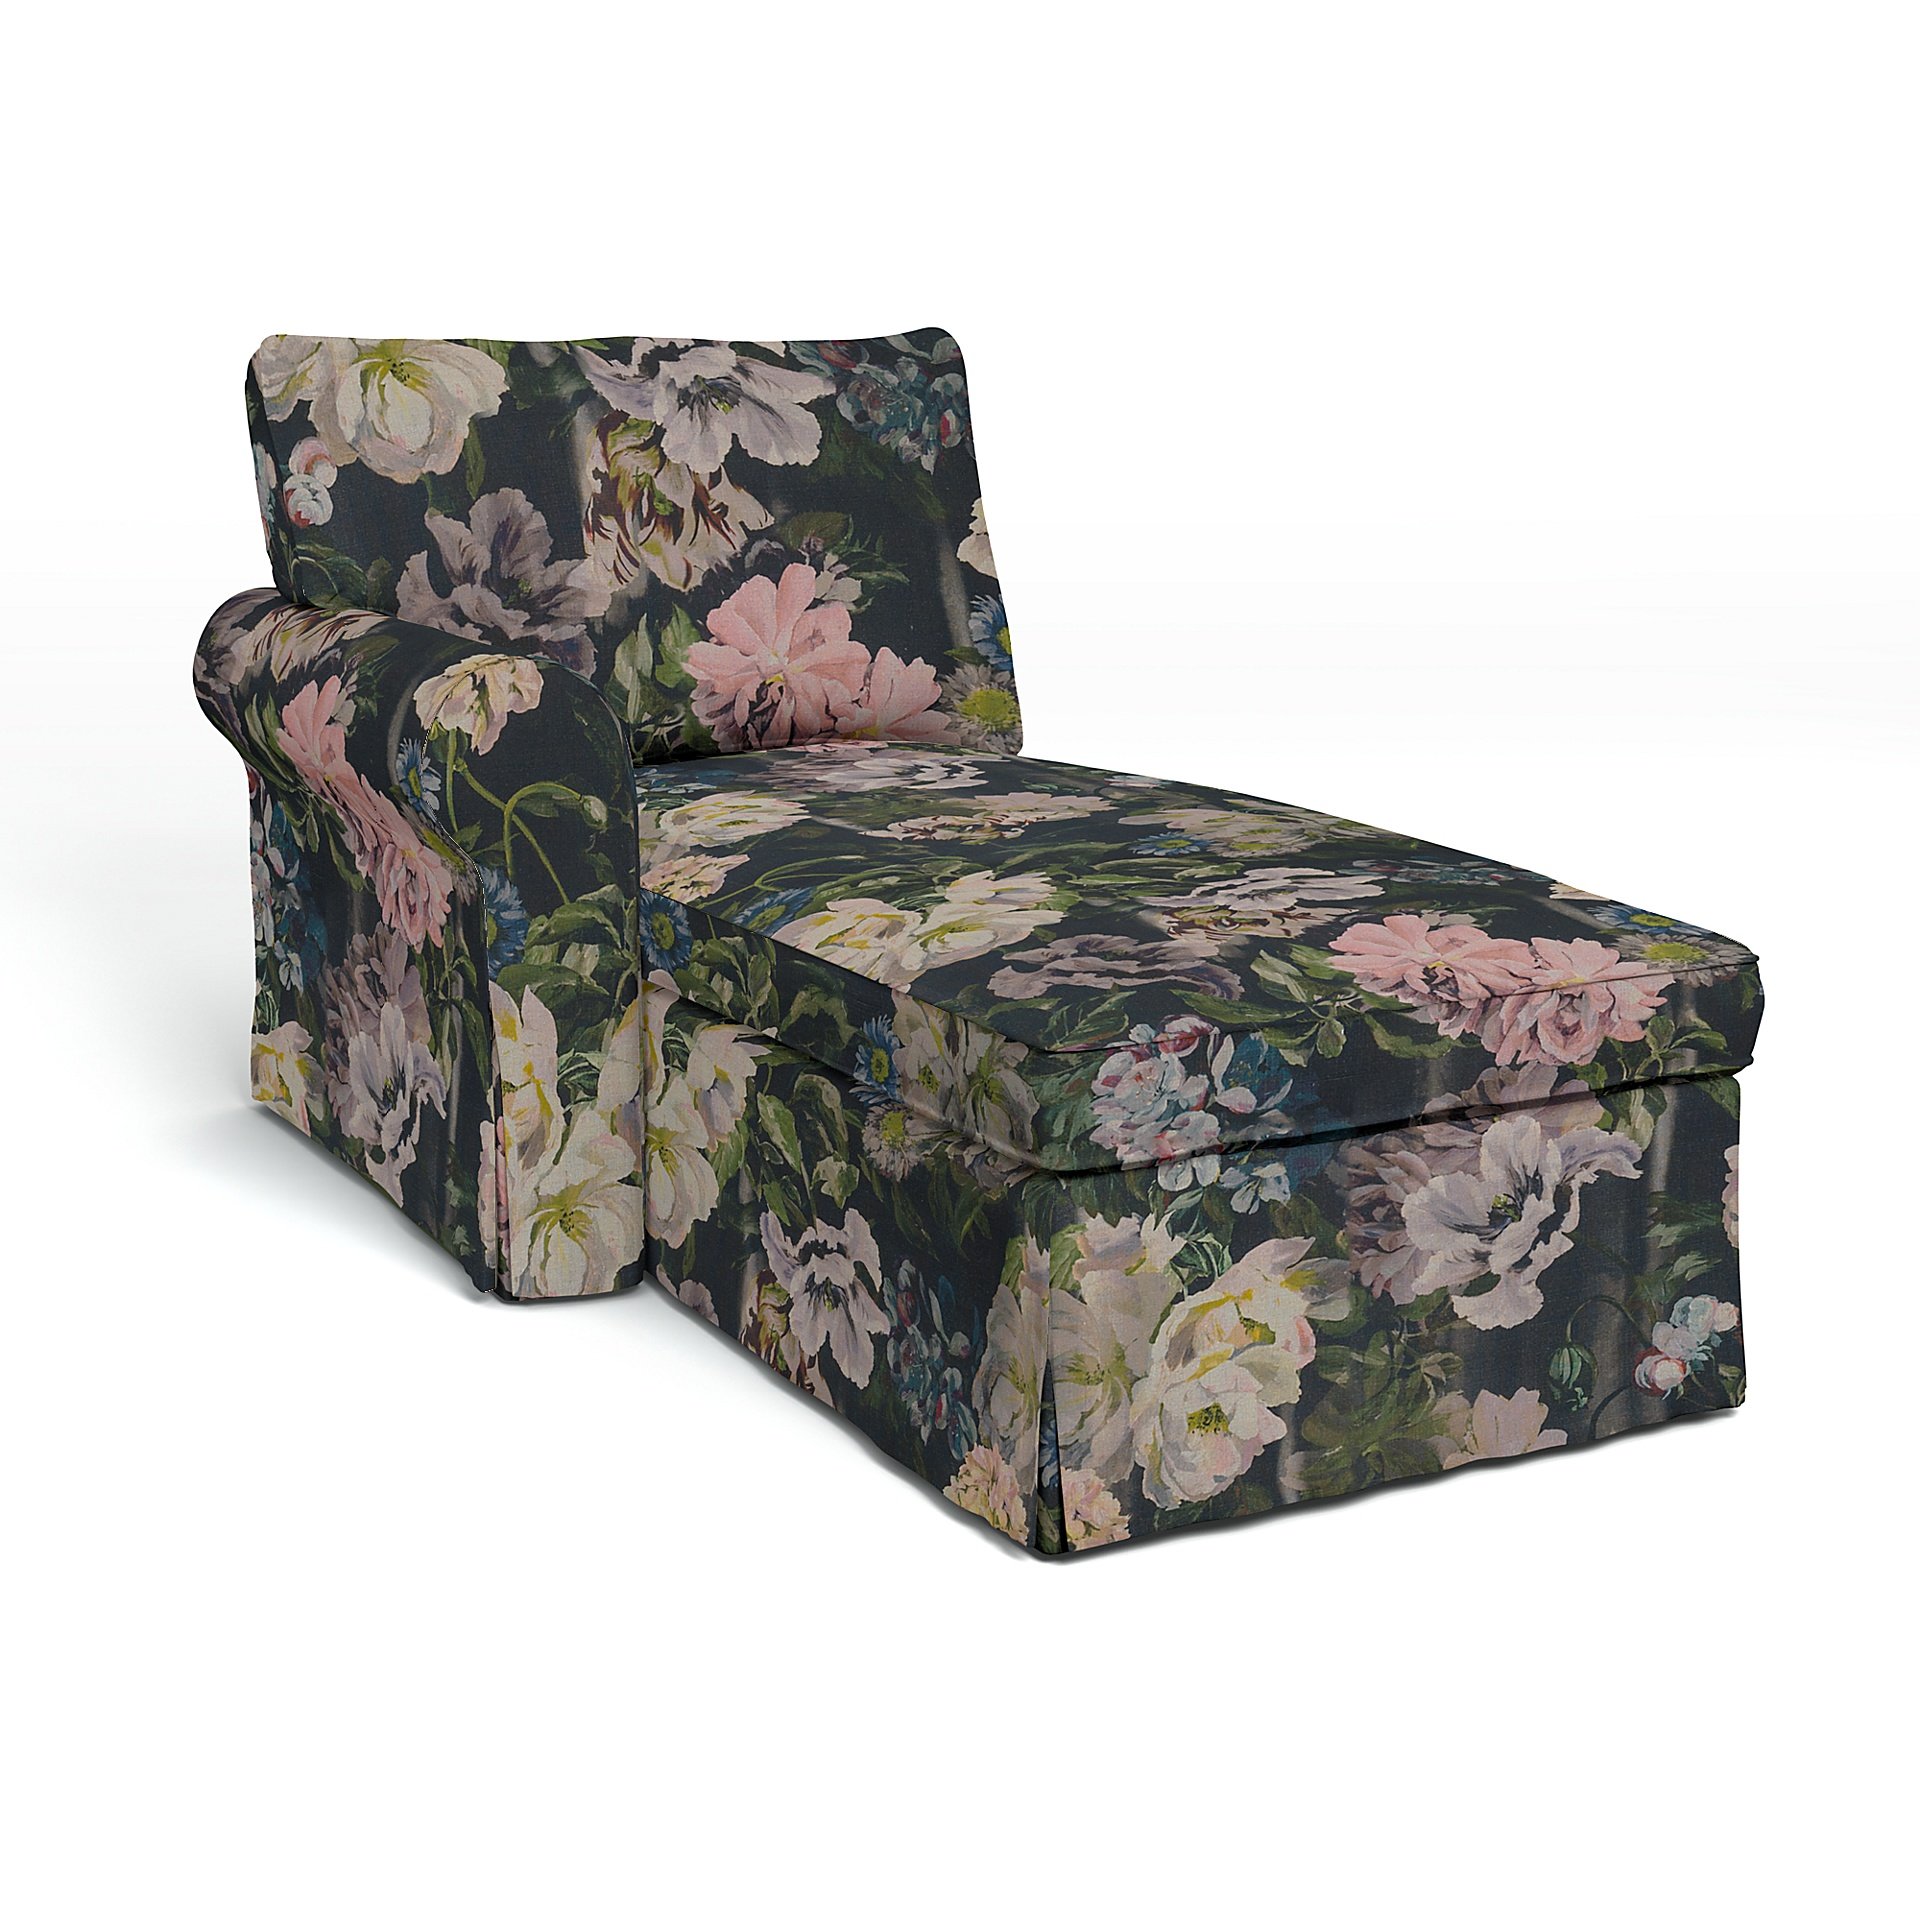 IKEA - Ektorp Chaise with Left Armrest Cover, Delft Flower - Graphite, Linen - Bemz